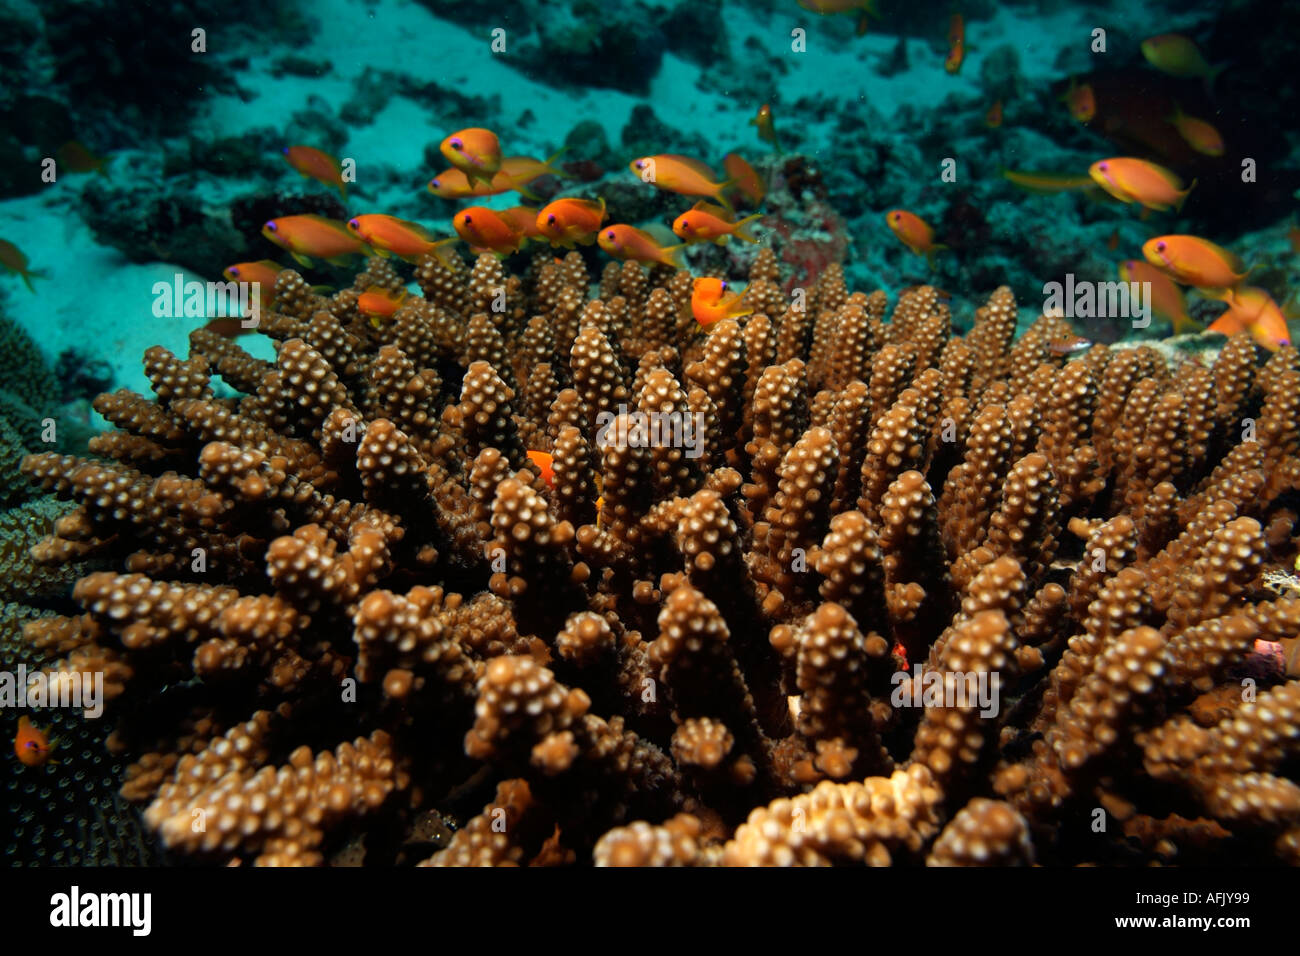 Maldives Baa Atoll Darajandhoo - Small Orange Fish Above A Nosey Coral Acropora Nasuta Stock Photo